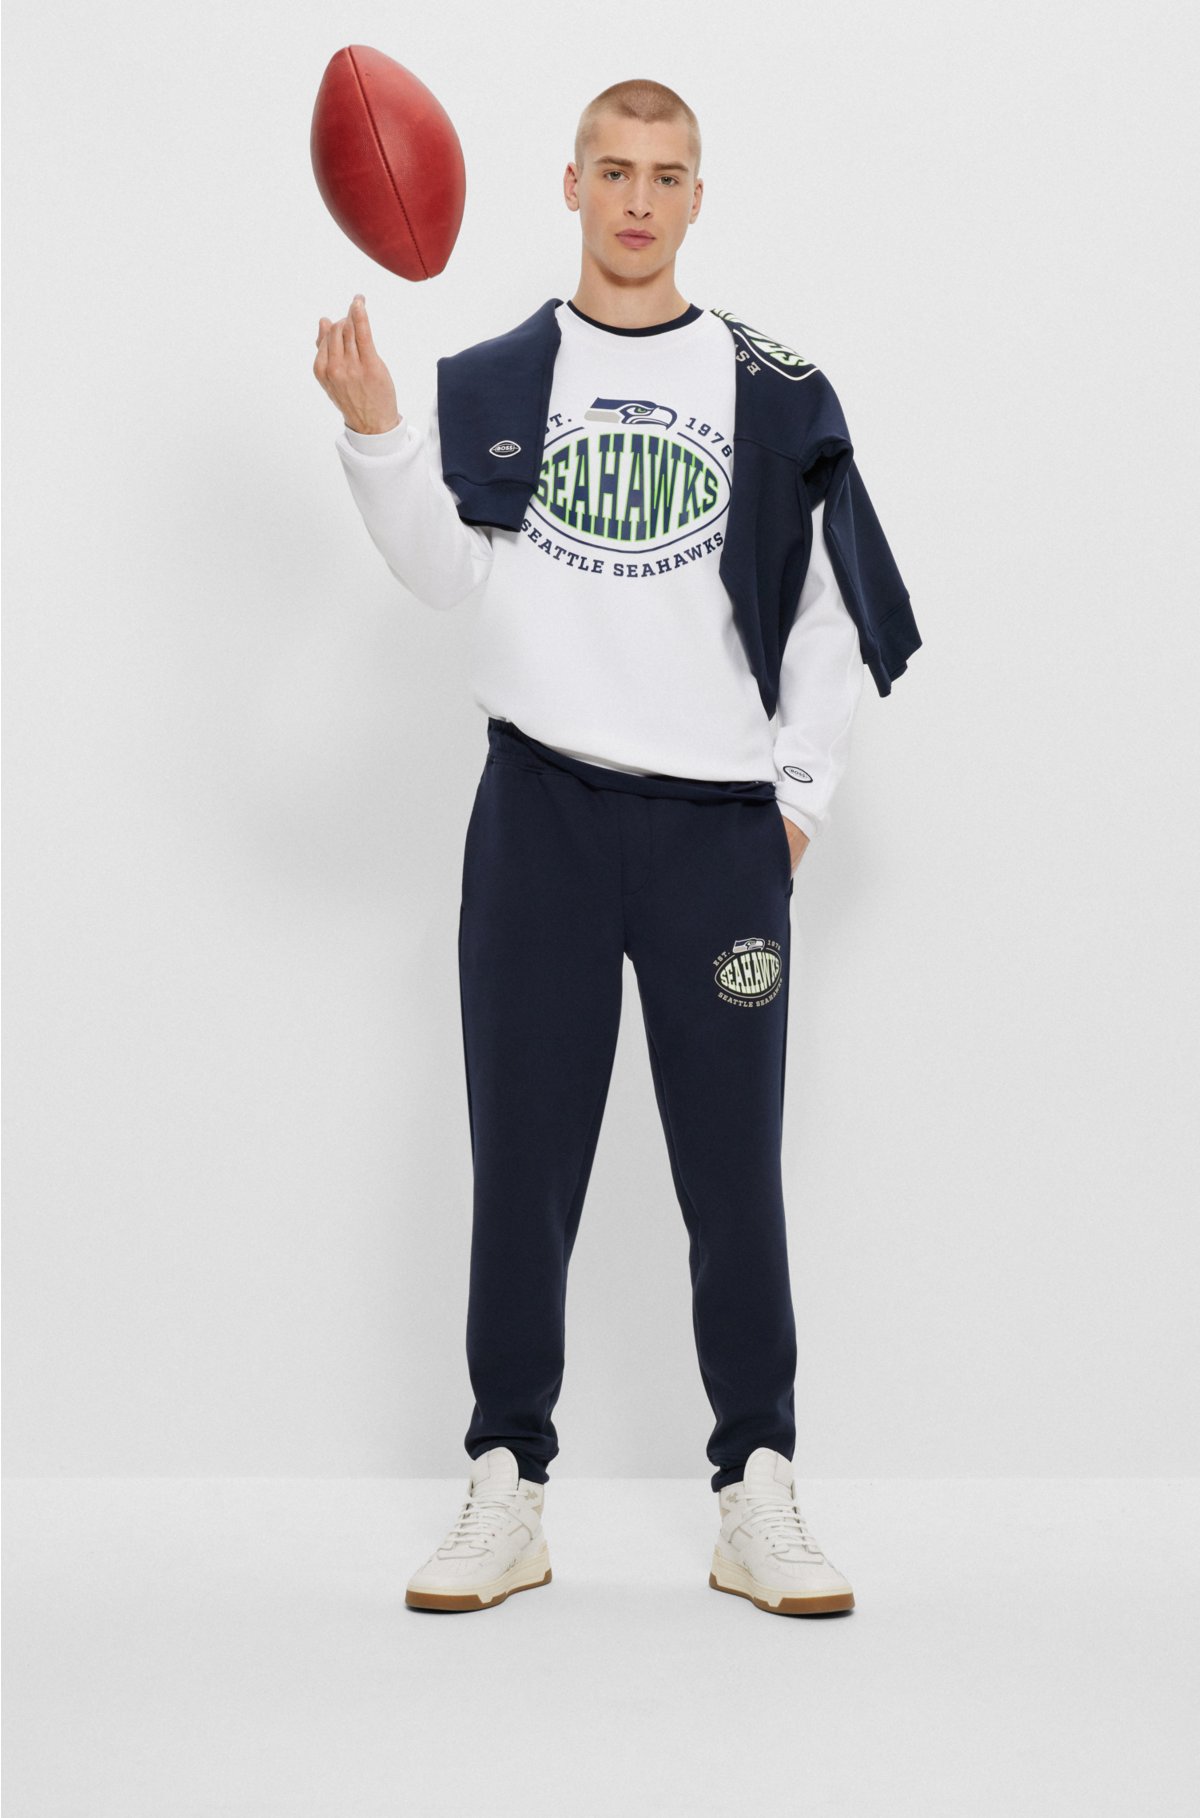 BOSS x NFL cotton-blend sweatshirt with collaborative branding, Seahawks